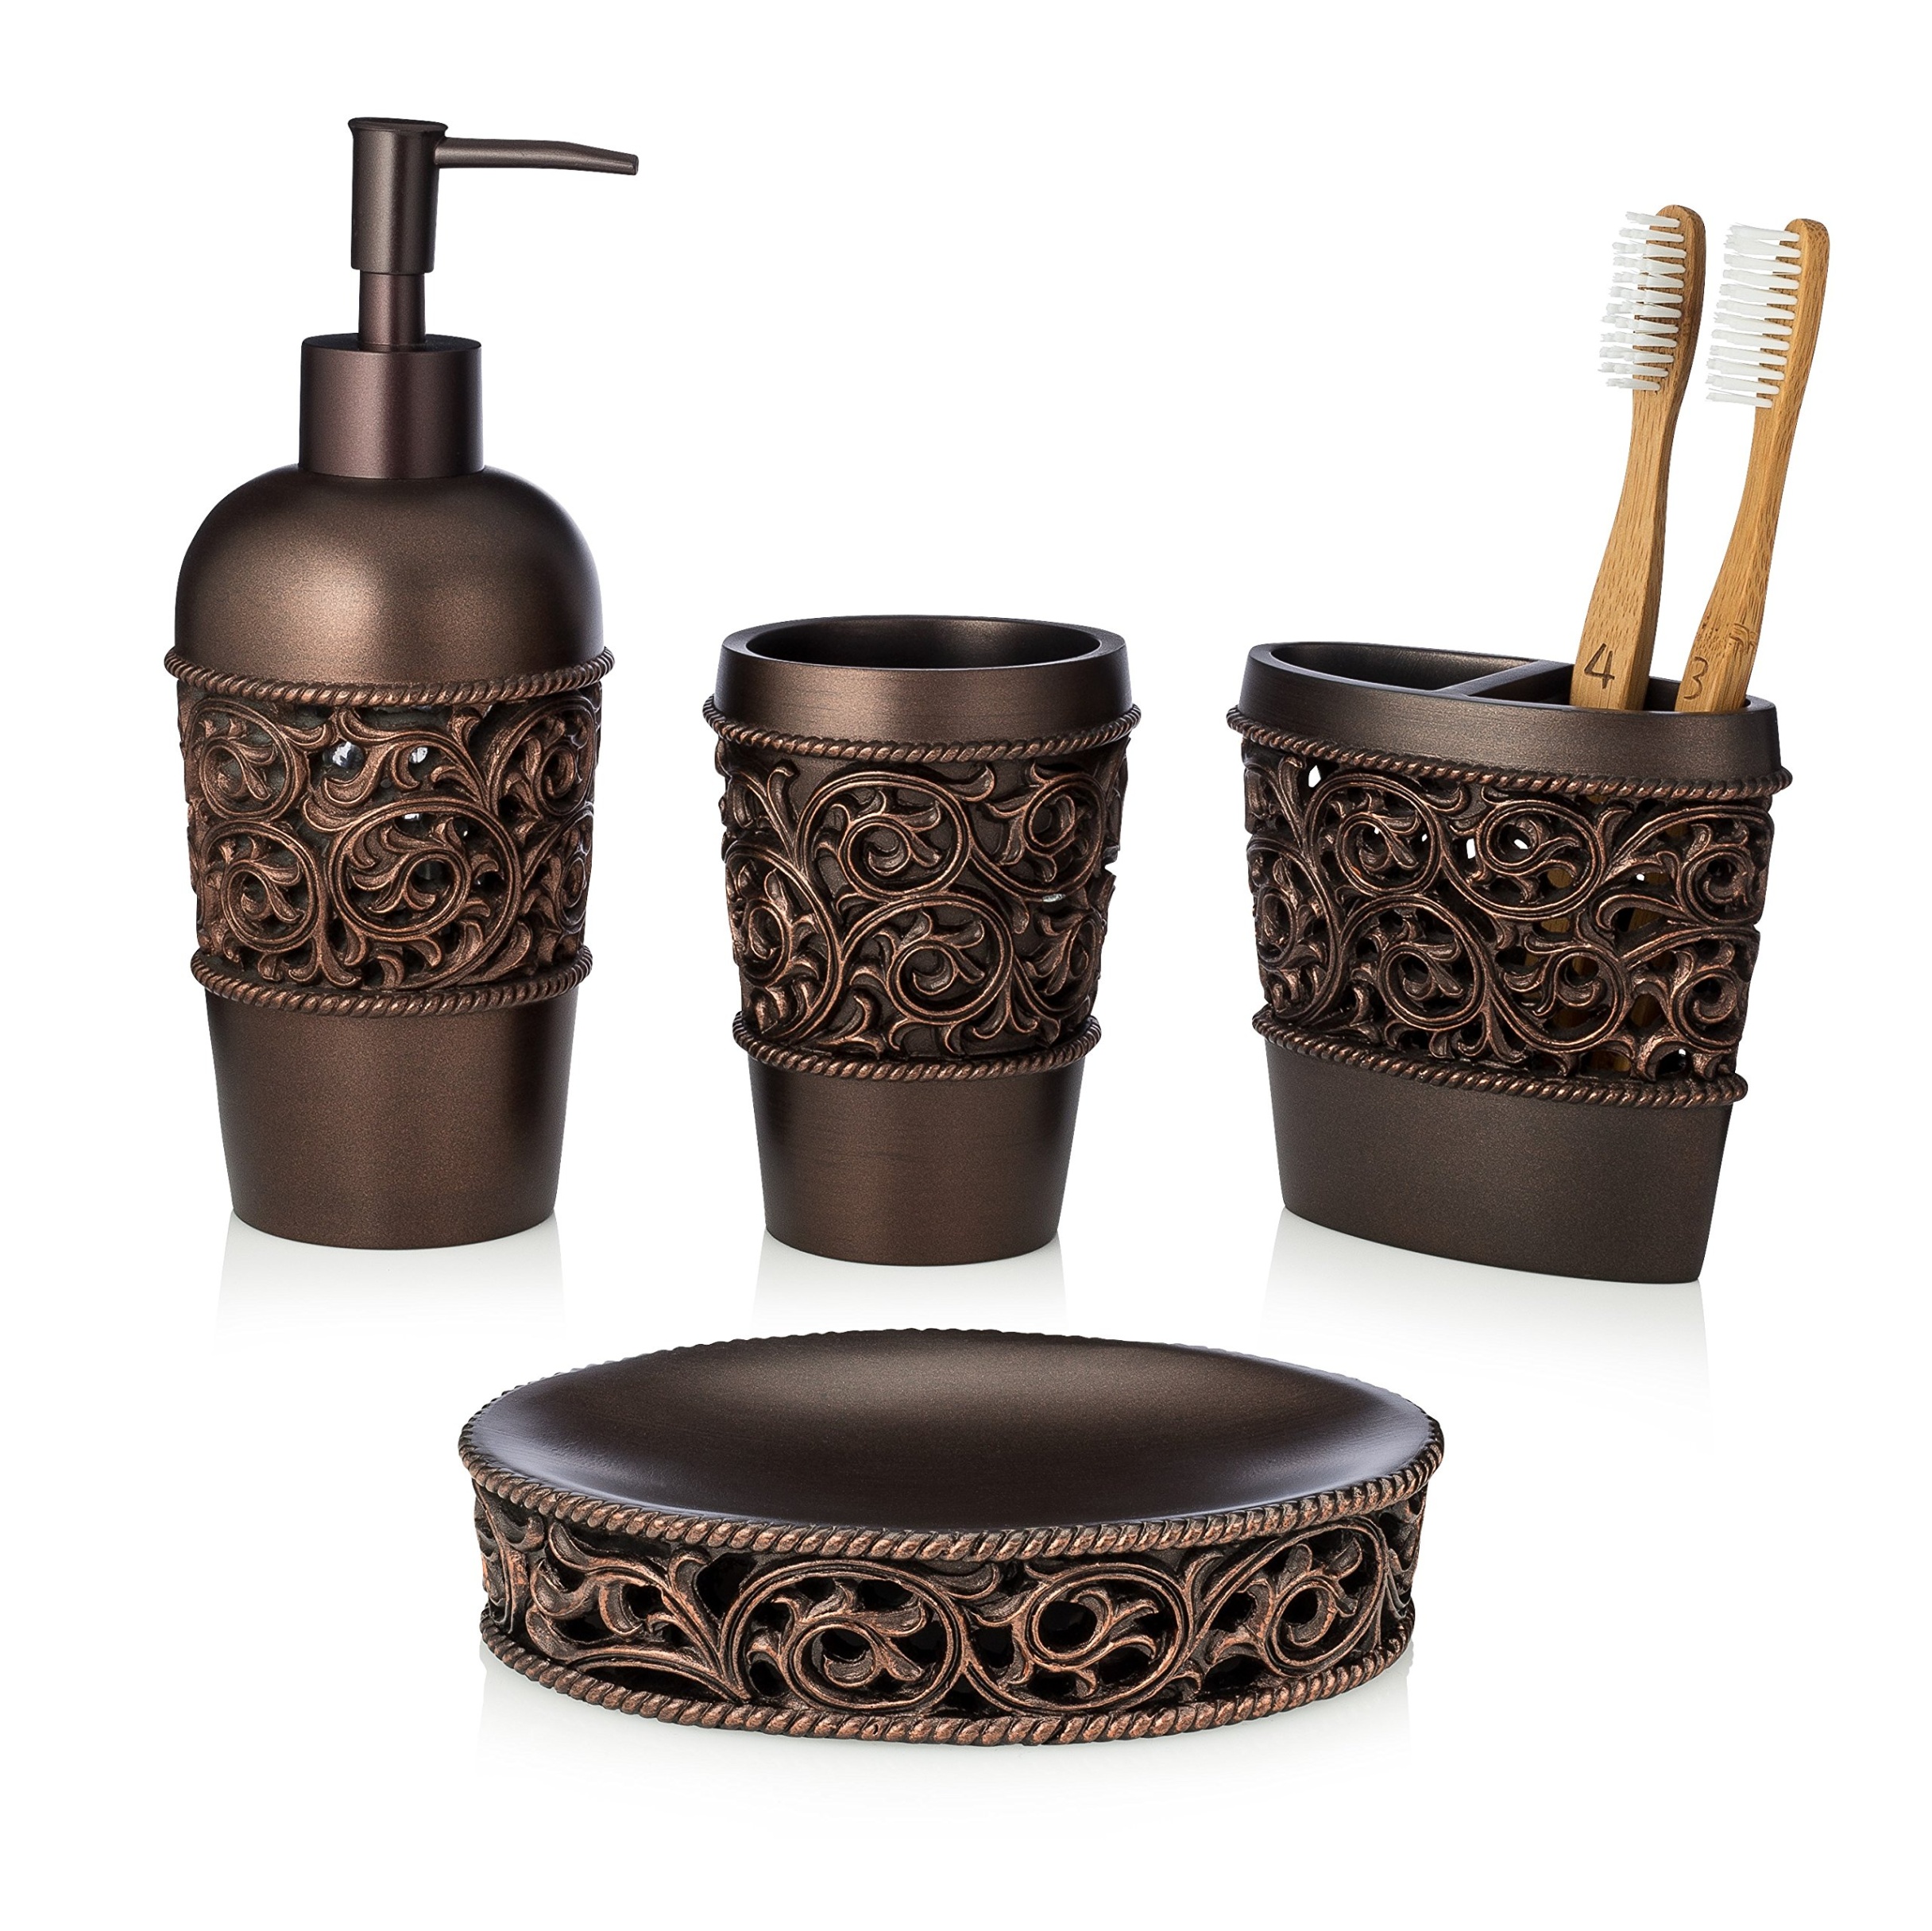 bronze bathroom accessories Niche Utama Home -Piece Bronze Bathroom Accessory Set, Complete Set Includes: Toothbrush  Holder, Lotion Dispenser, Tumbler and Soap Dish